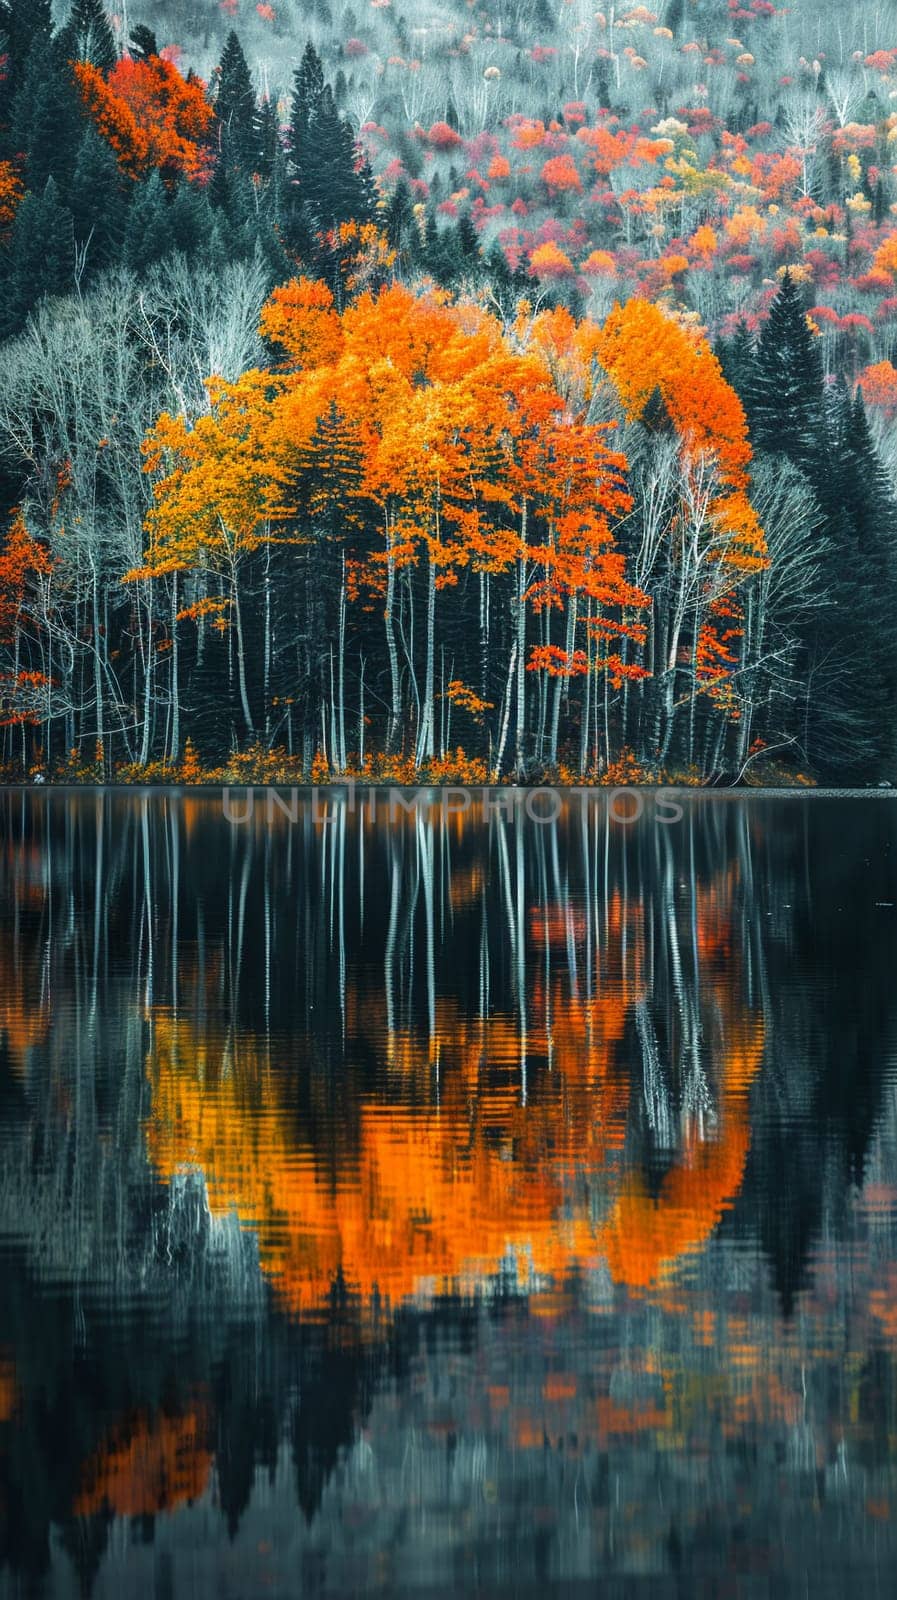 Vivid autumn colors reflected in a still lake, showcasing seasonal change.